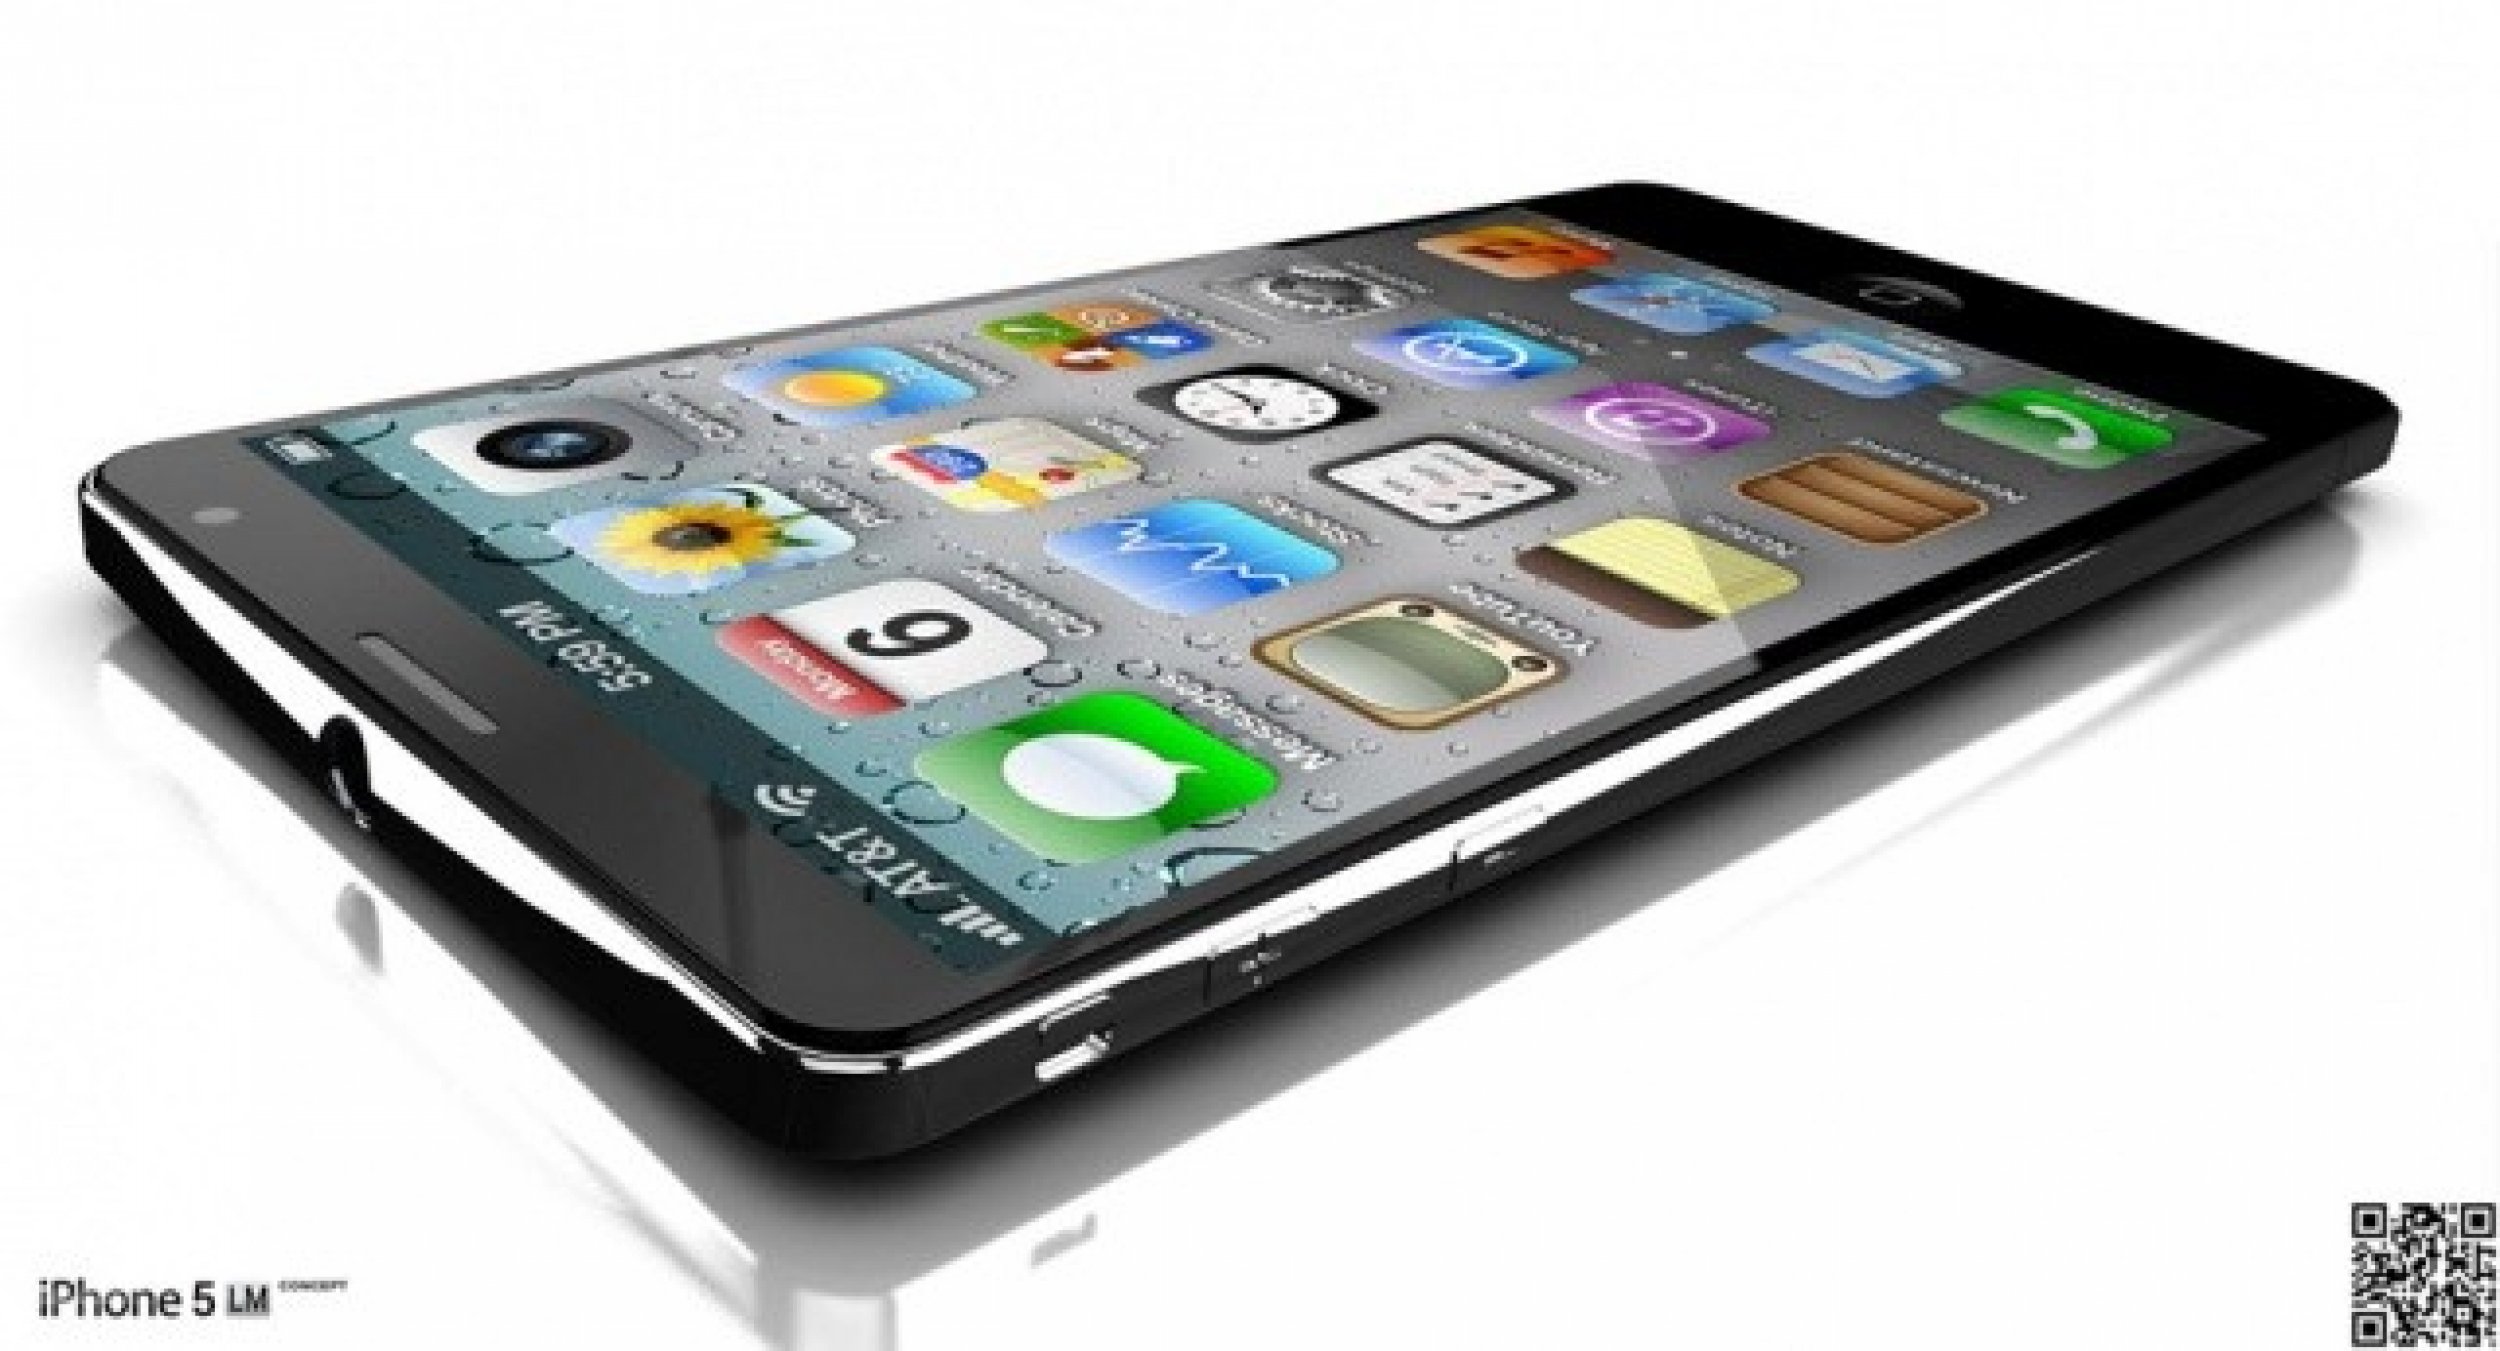 Liquid Metal iPhone 5 Concept - French Designer Antoine Brieux Interprets Apples Rumored Specs